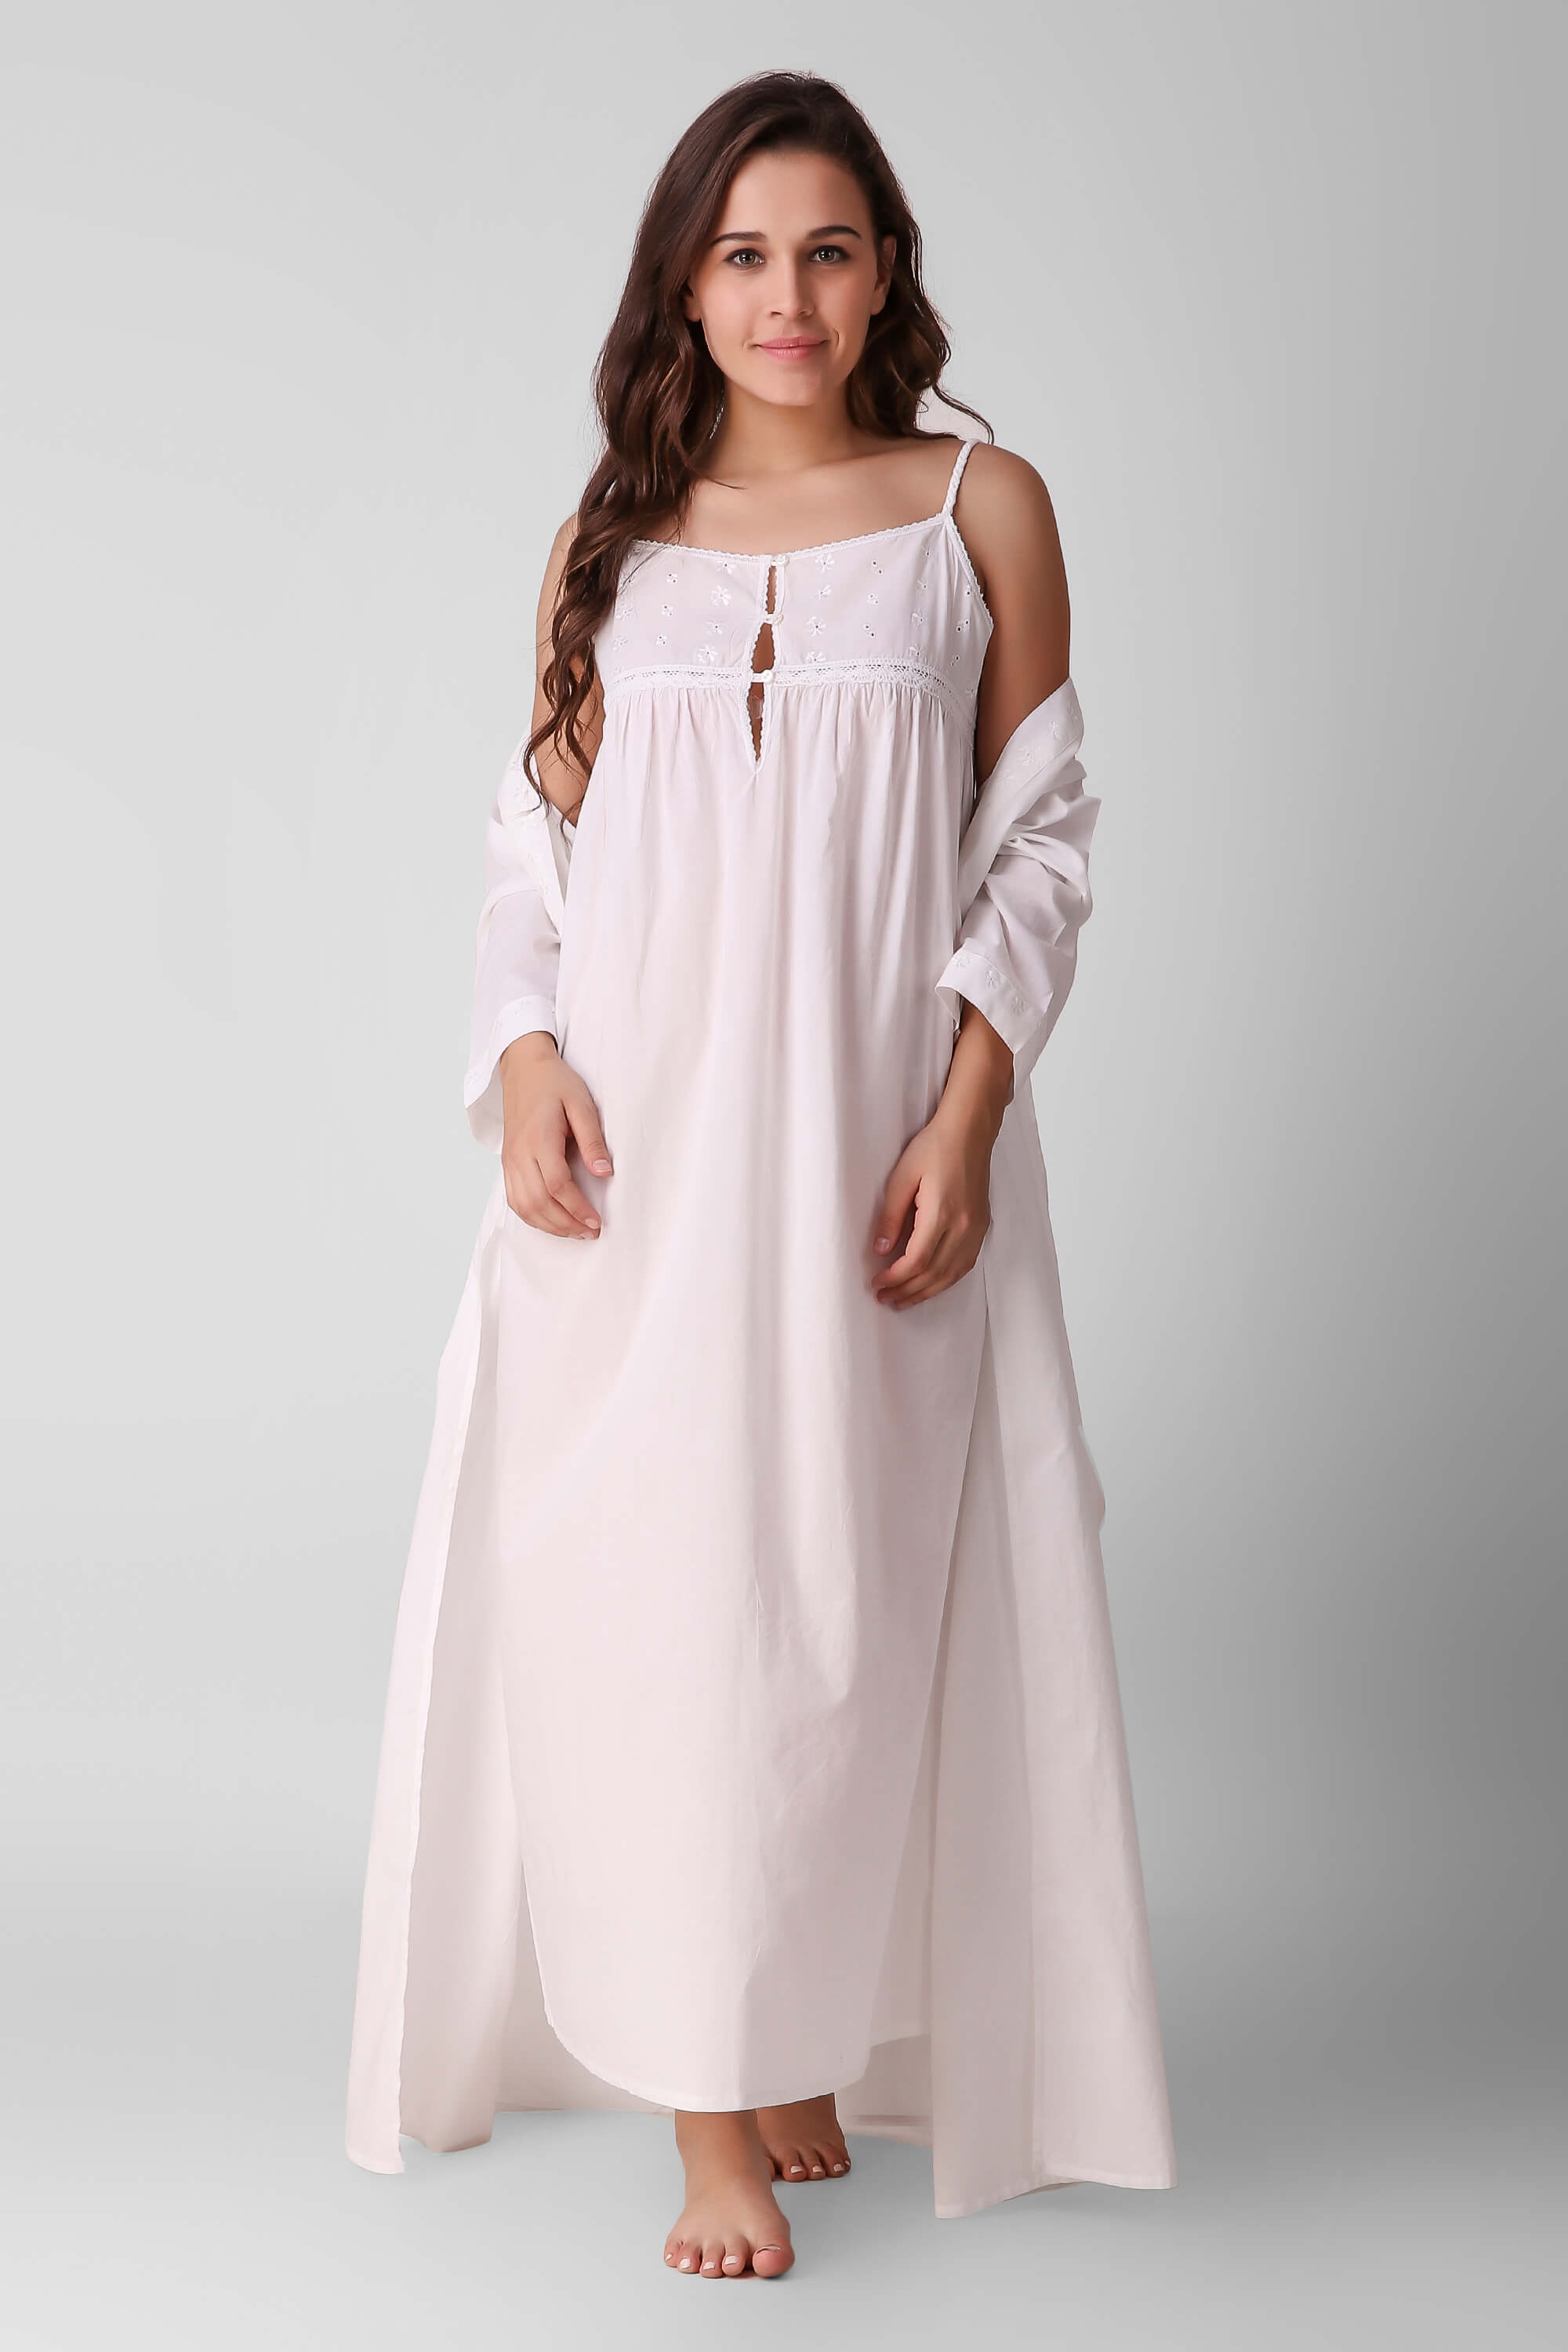 Contrast Lace Ruffle Trim Night Dress | Night dress for women, Night dress,  Fashion clothes women